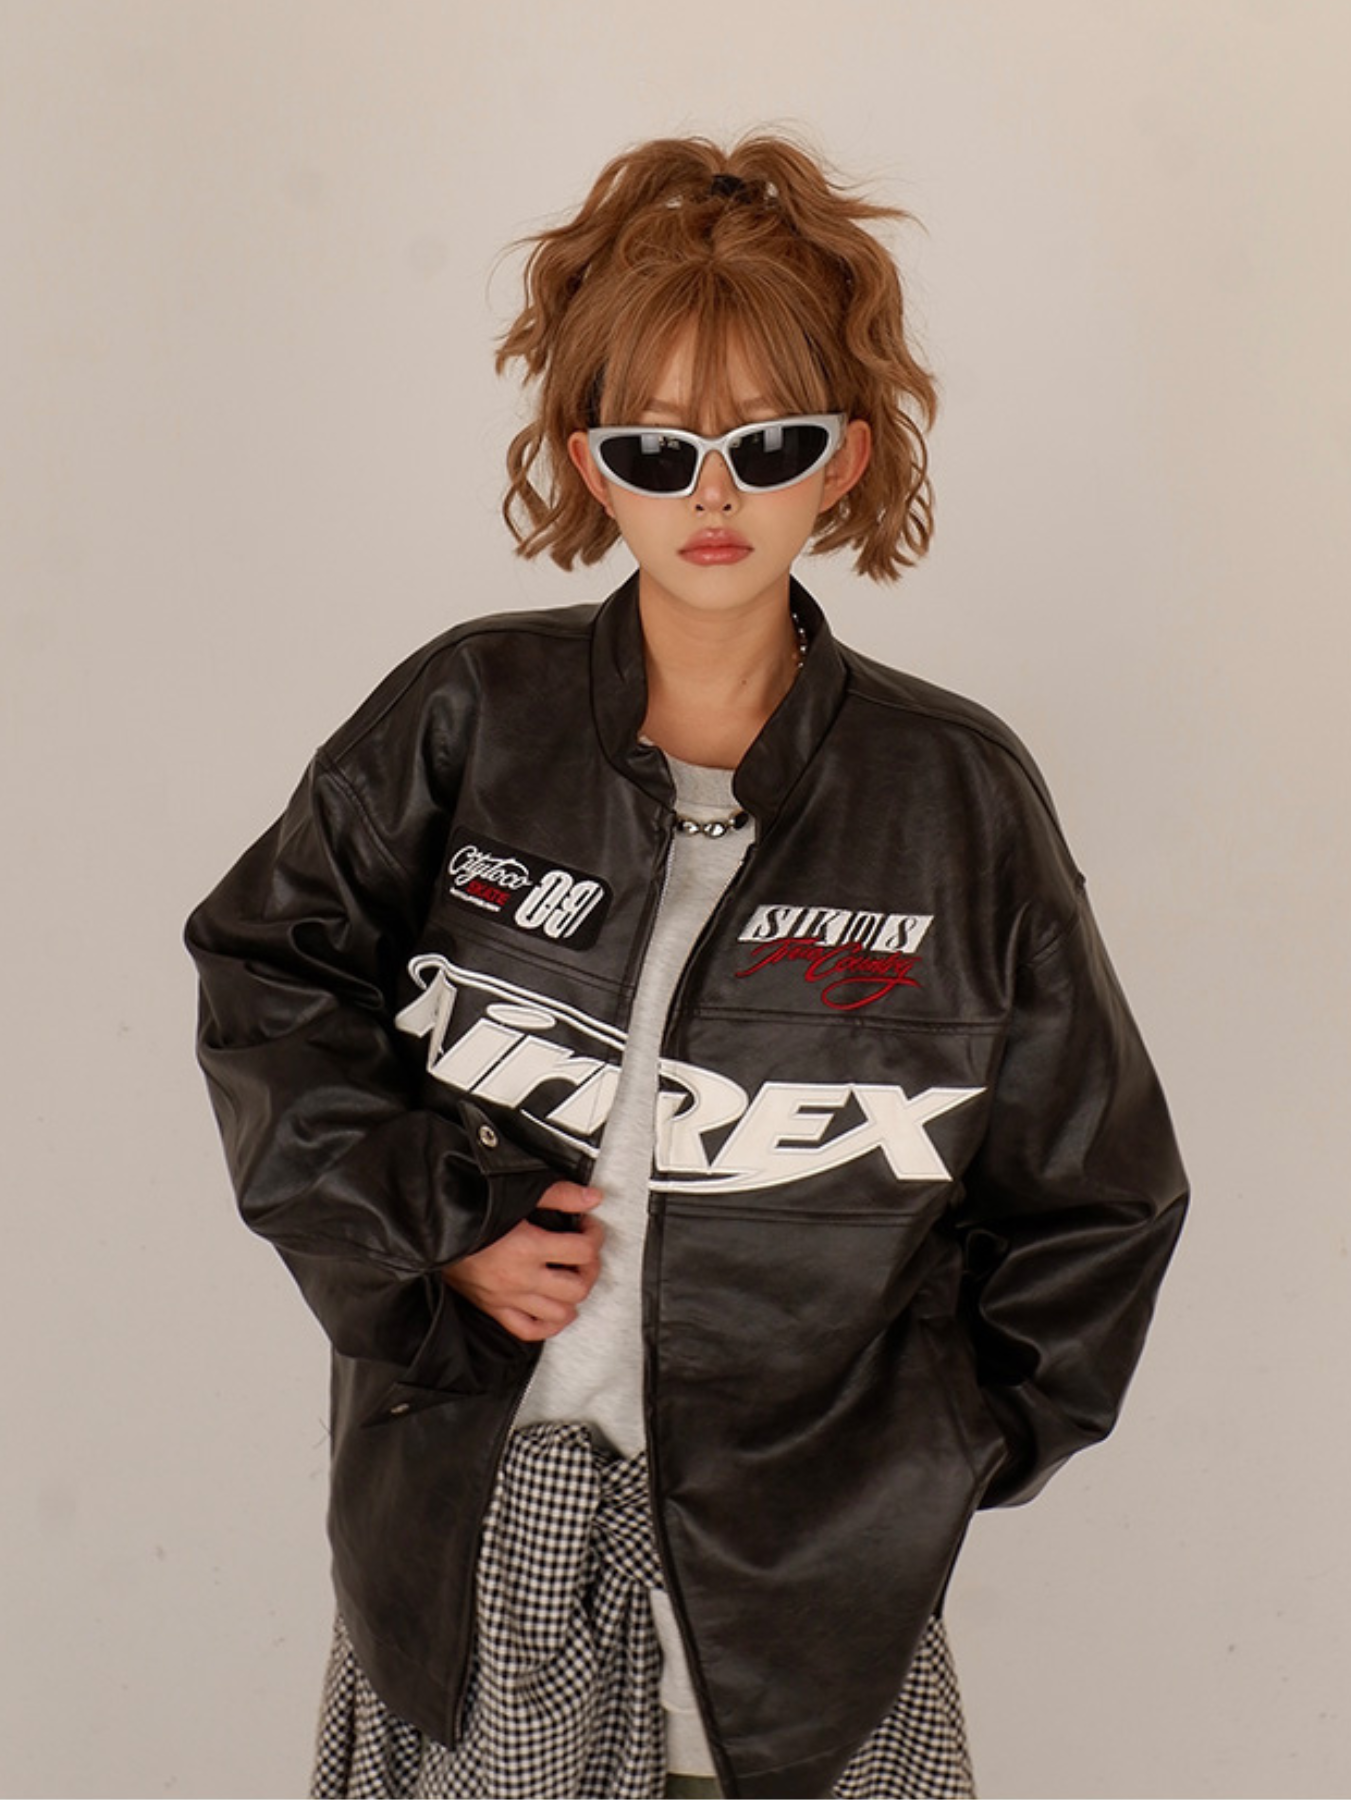 QS300A "AirREX" leather jacket